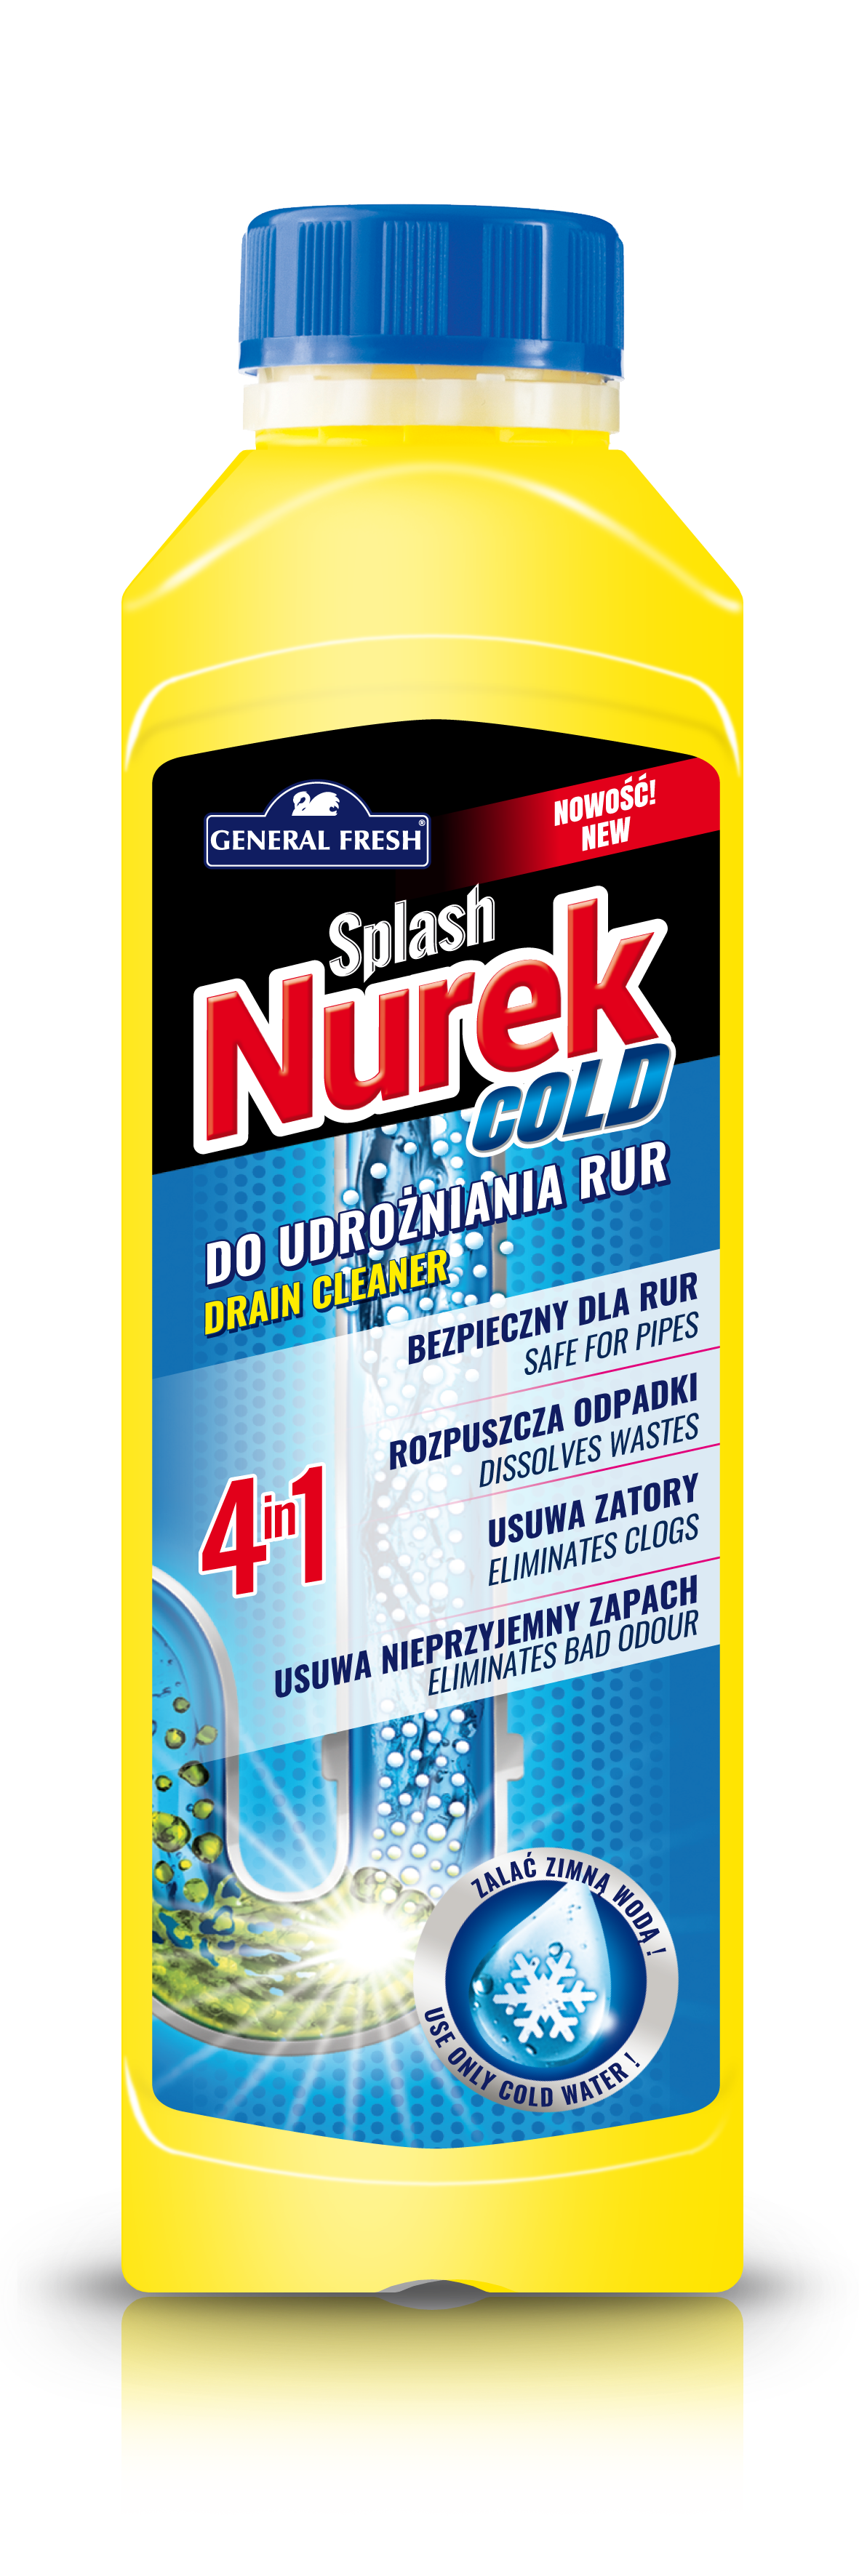 splash nurek cold 7252